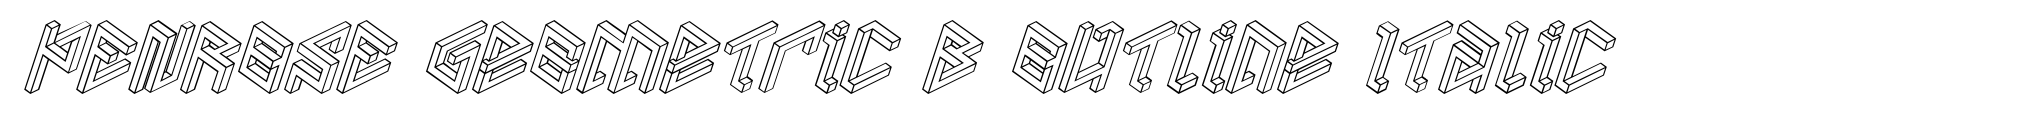 PENROSE Geometric B Outline Italic image